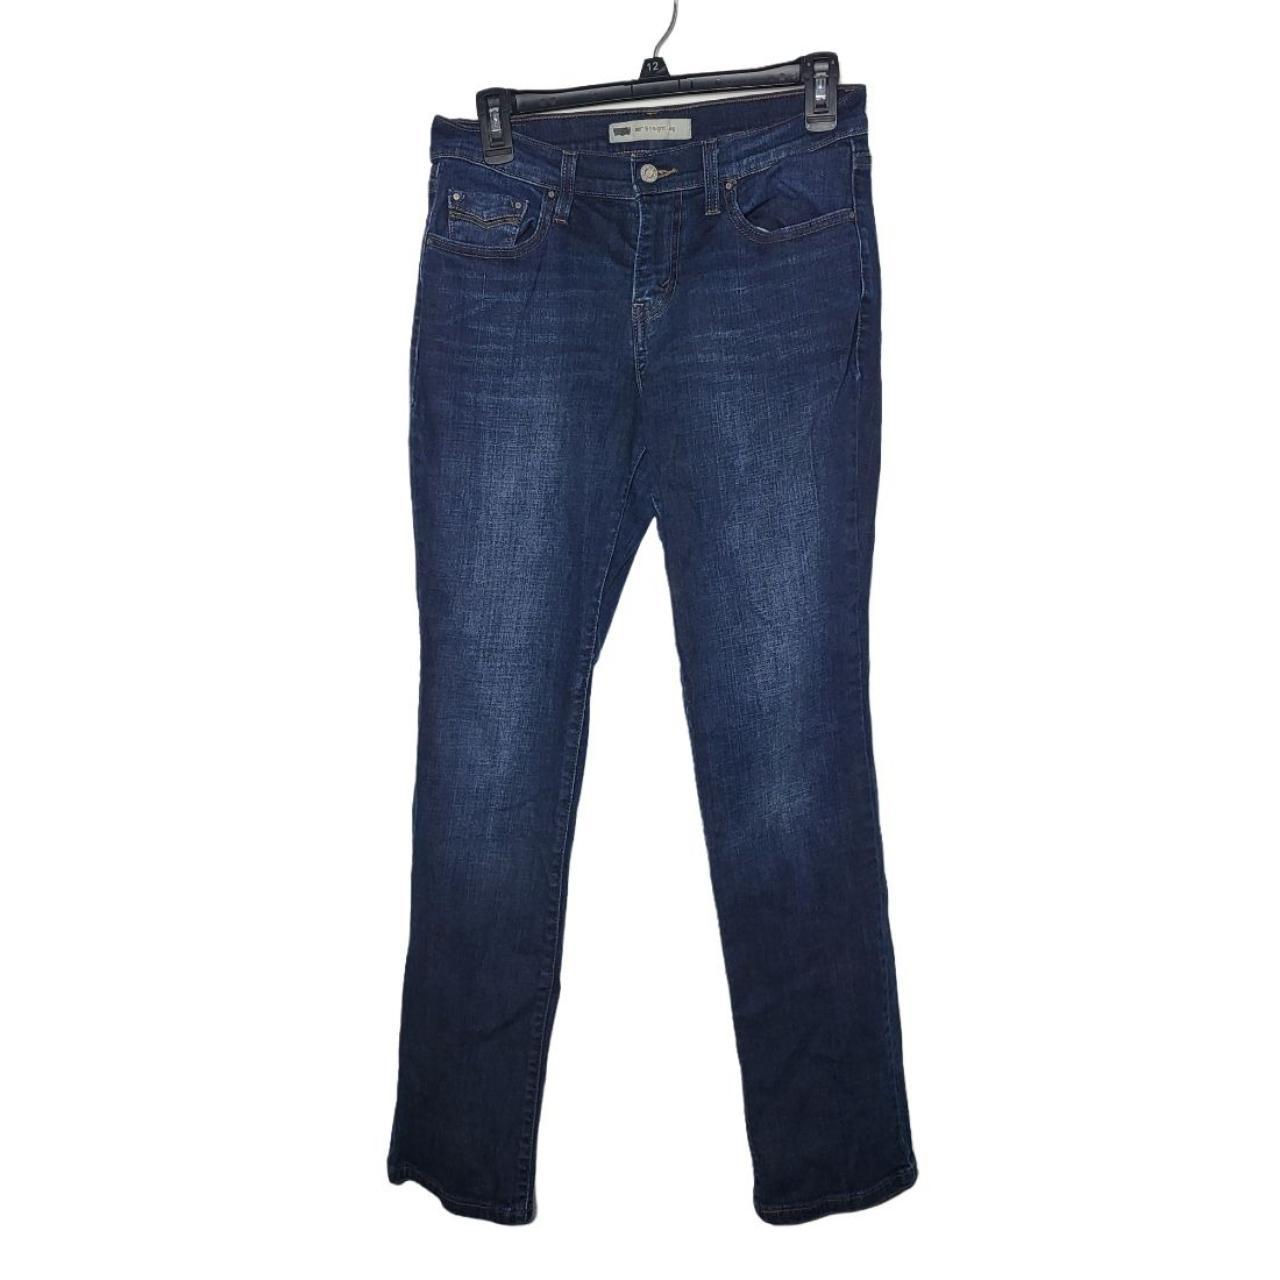 Levi's 505 Straight Leg Denim Blue Jeans Women's... - Depop